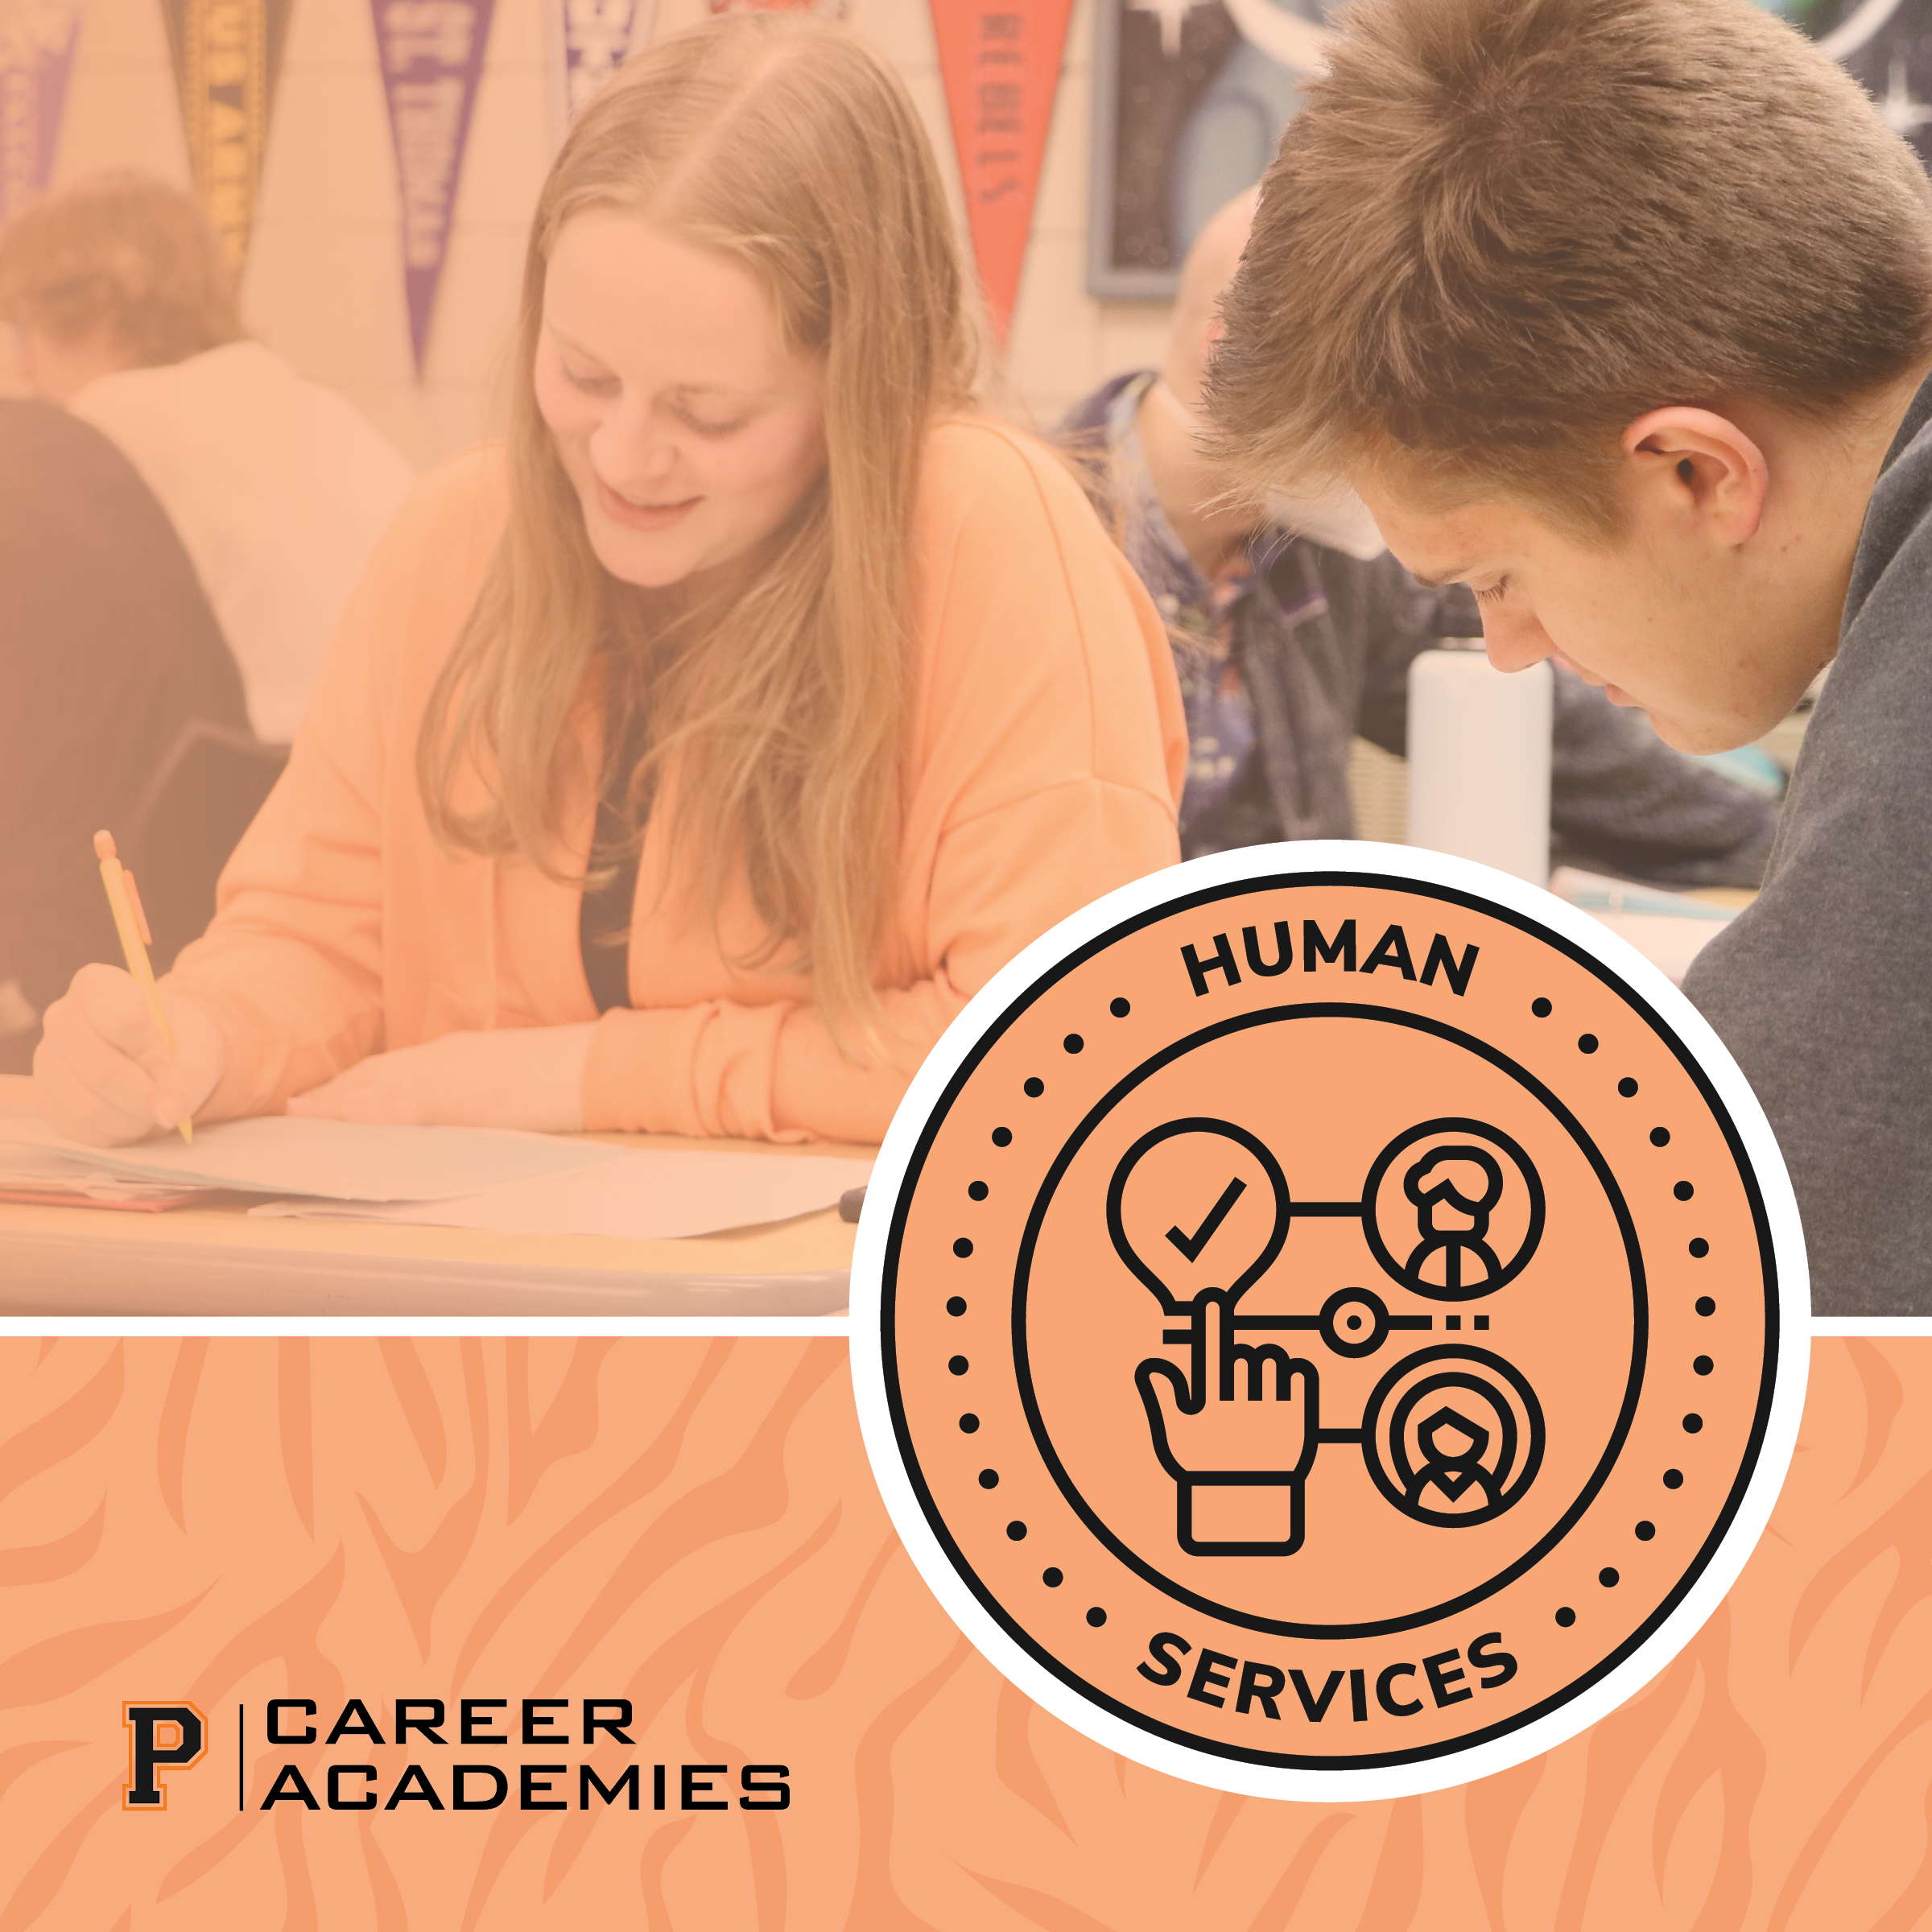 p career academies human services